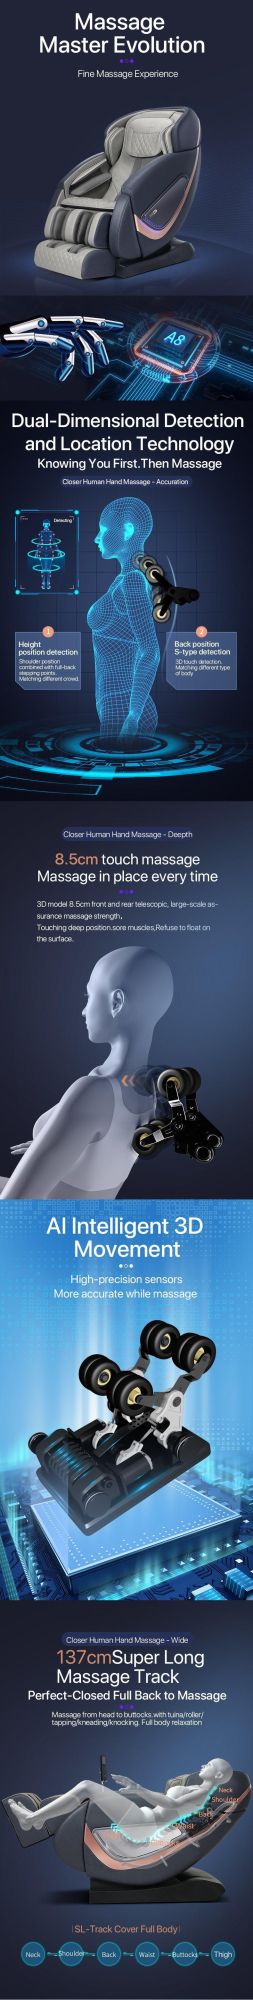 Best New Design L Track Full Body Massage Chair Price Most Popular